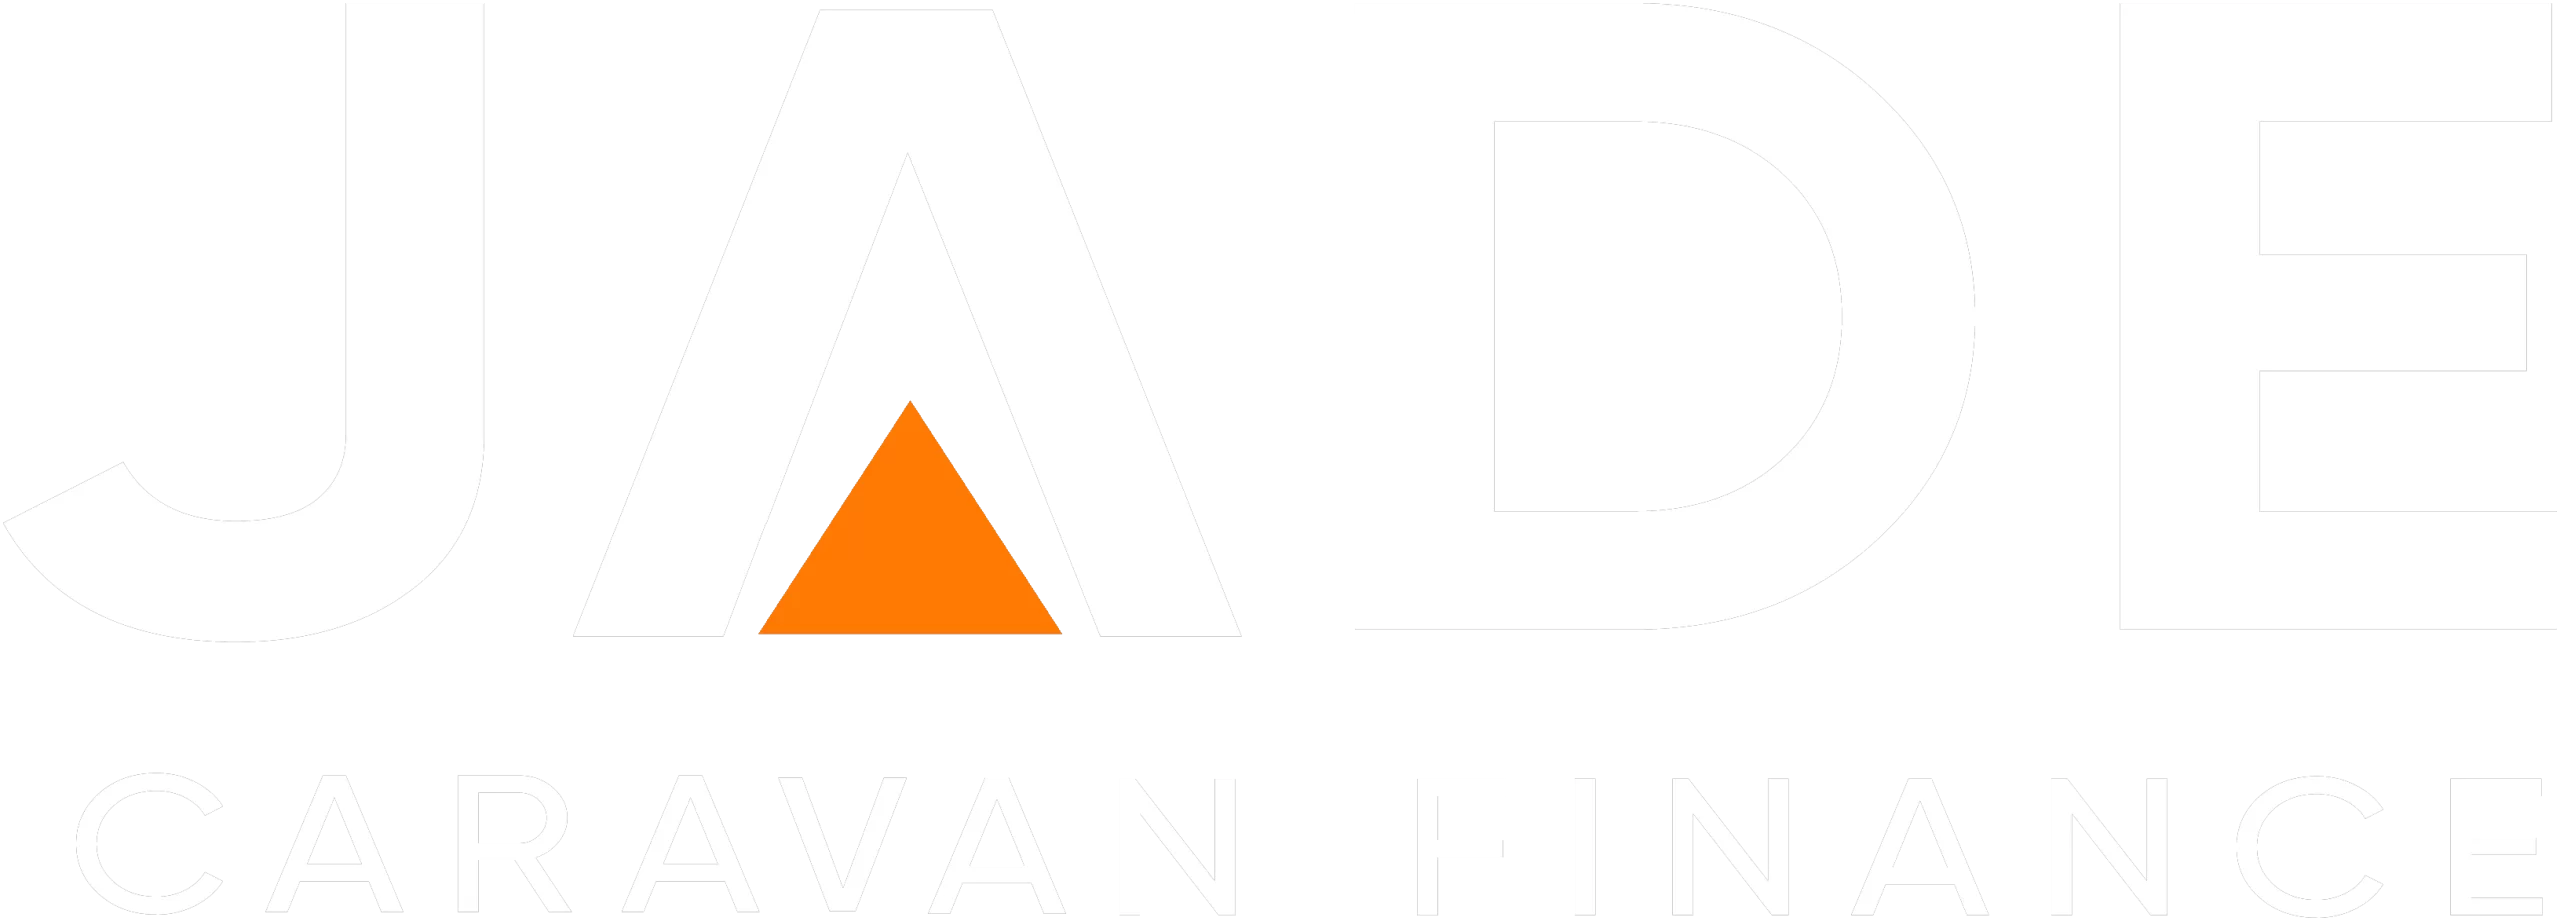 Jade Caravan Finance Logo White